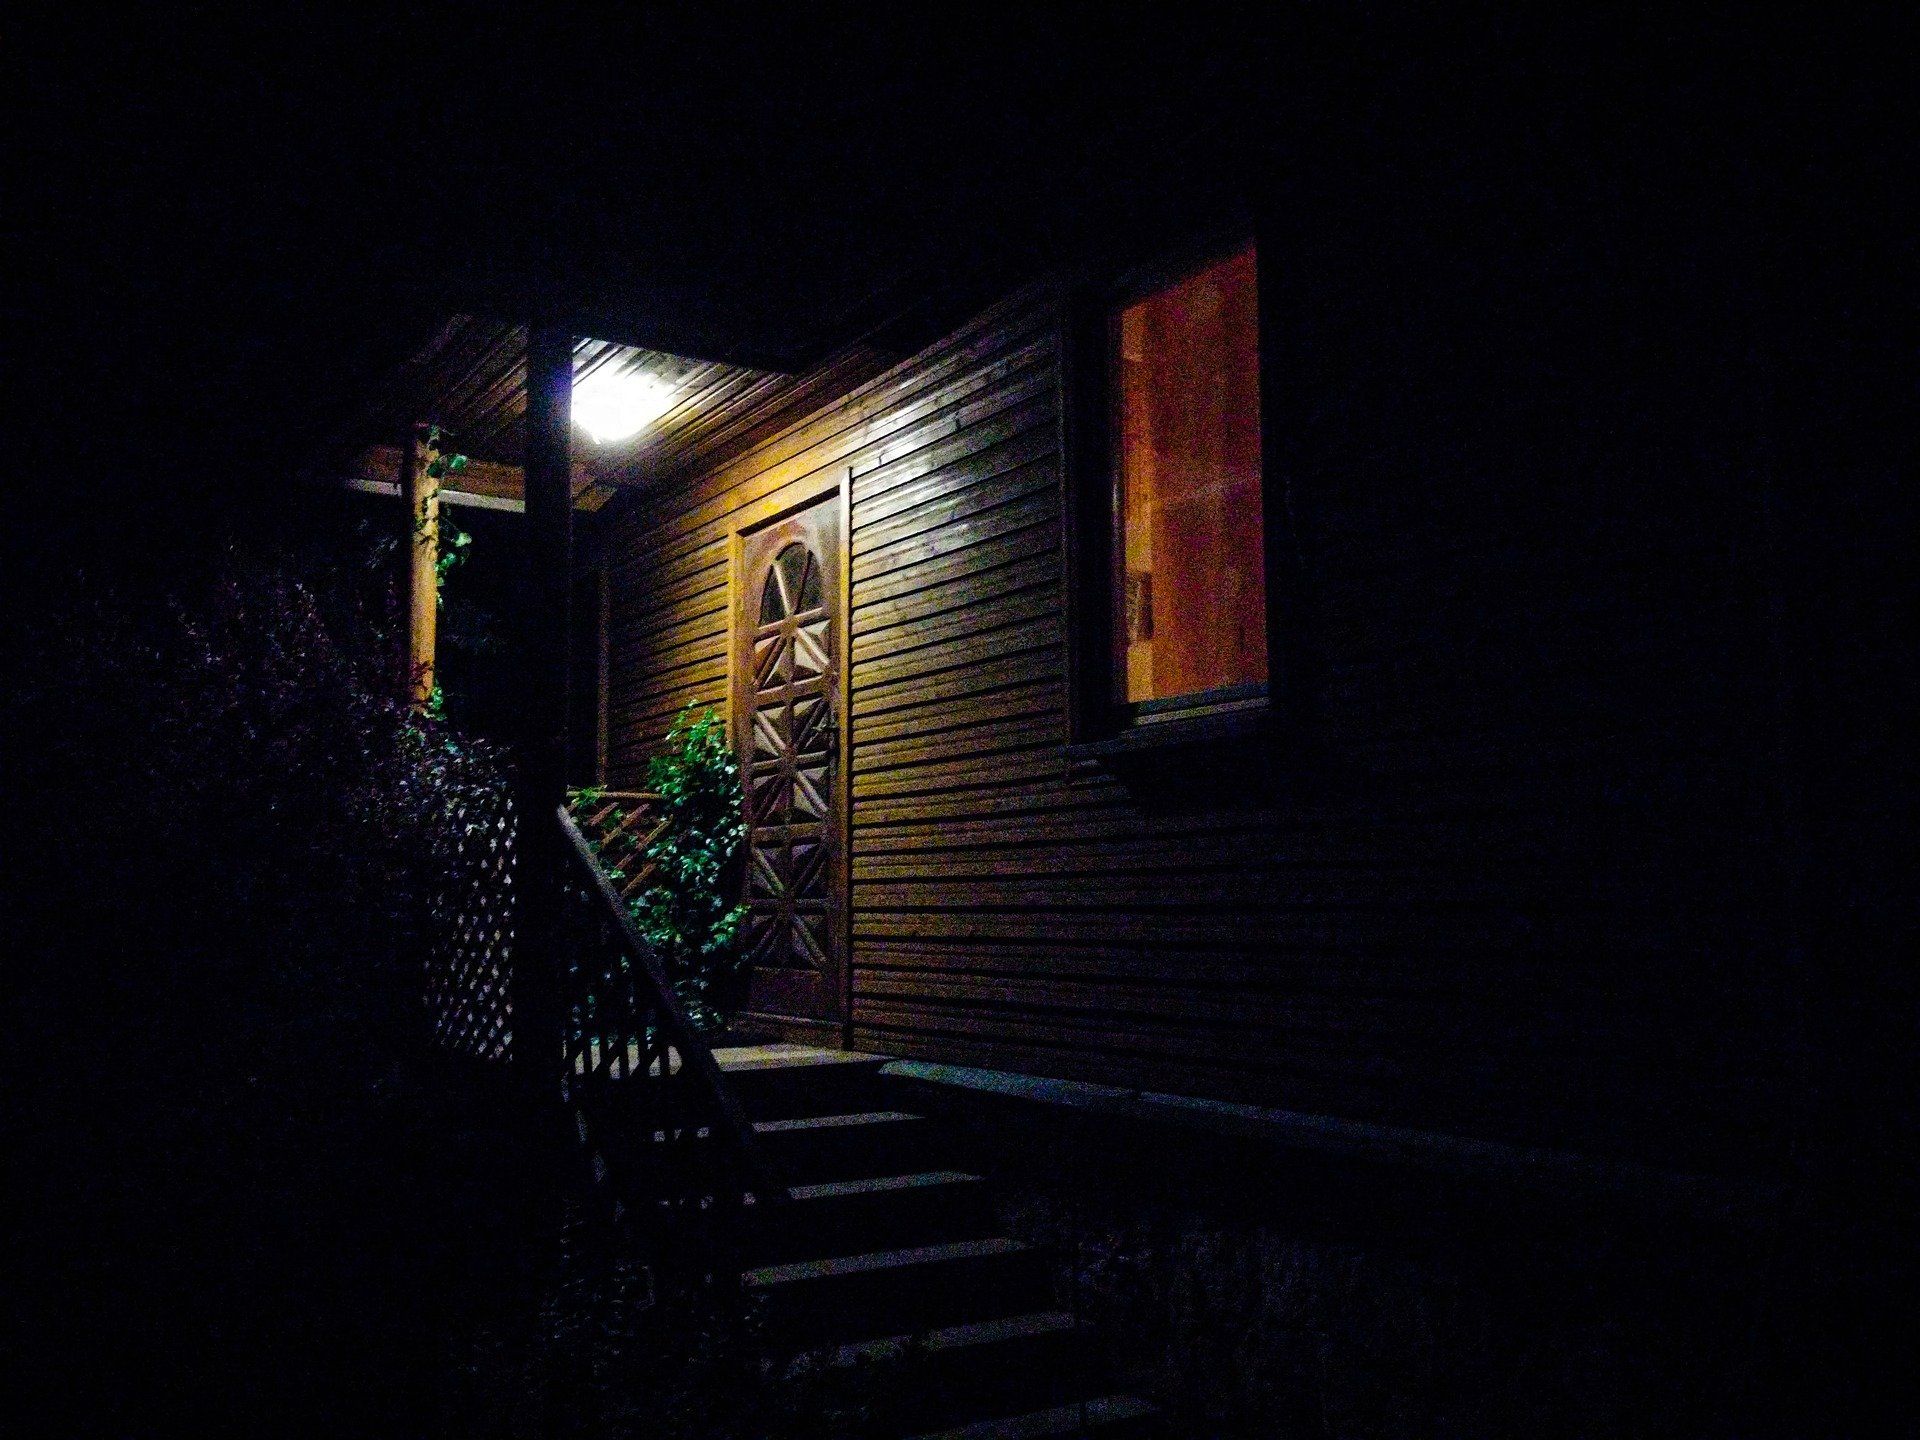 Outside porch light